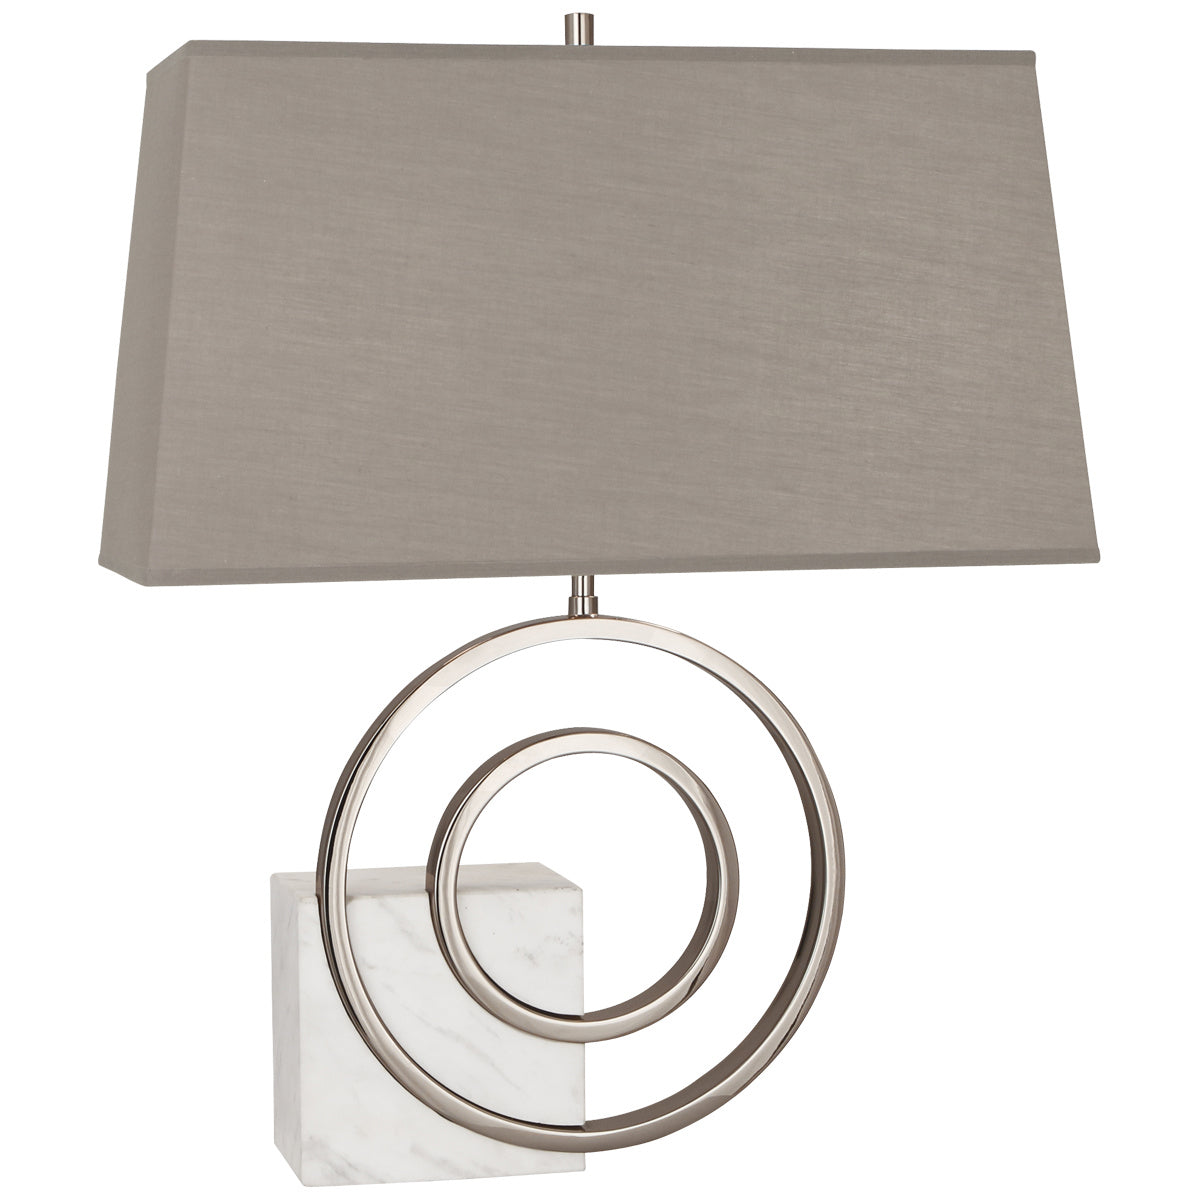 Robert Abbey - Two Light Table Lamp - Jonathan Adler Saturn - Polished Nickel w/ White Marble- Union Lighting Luminaires Decor